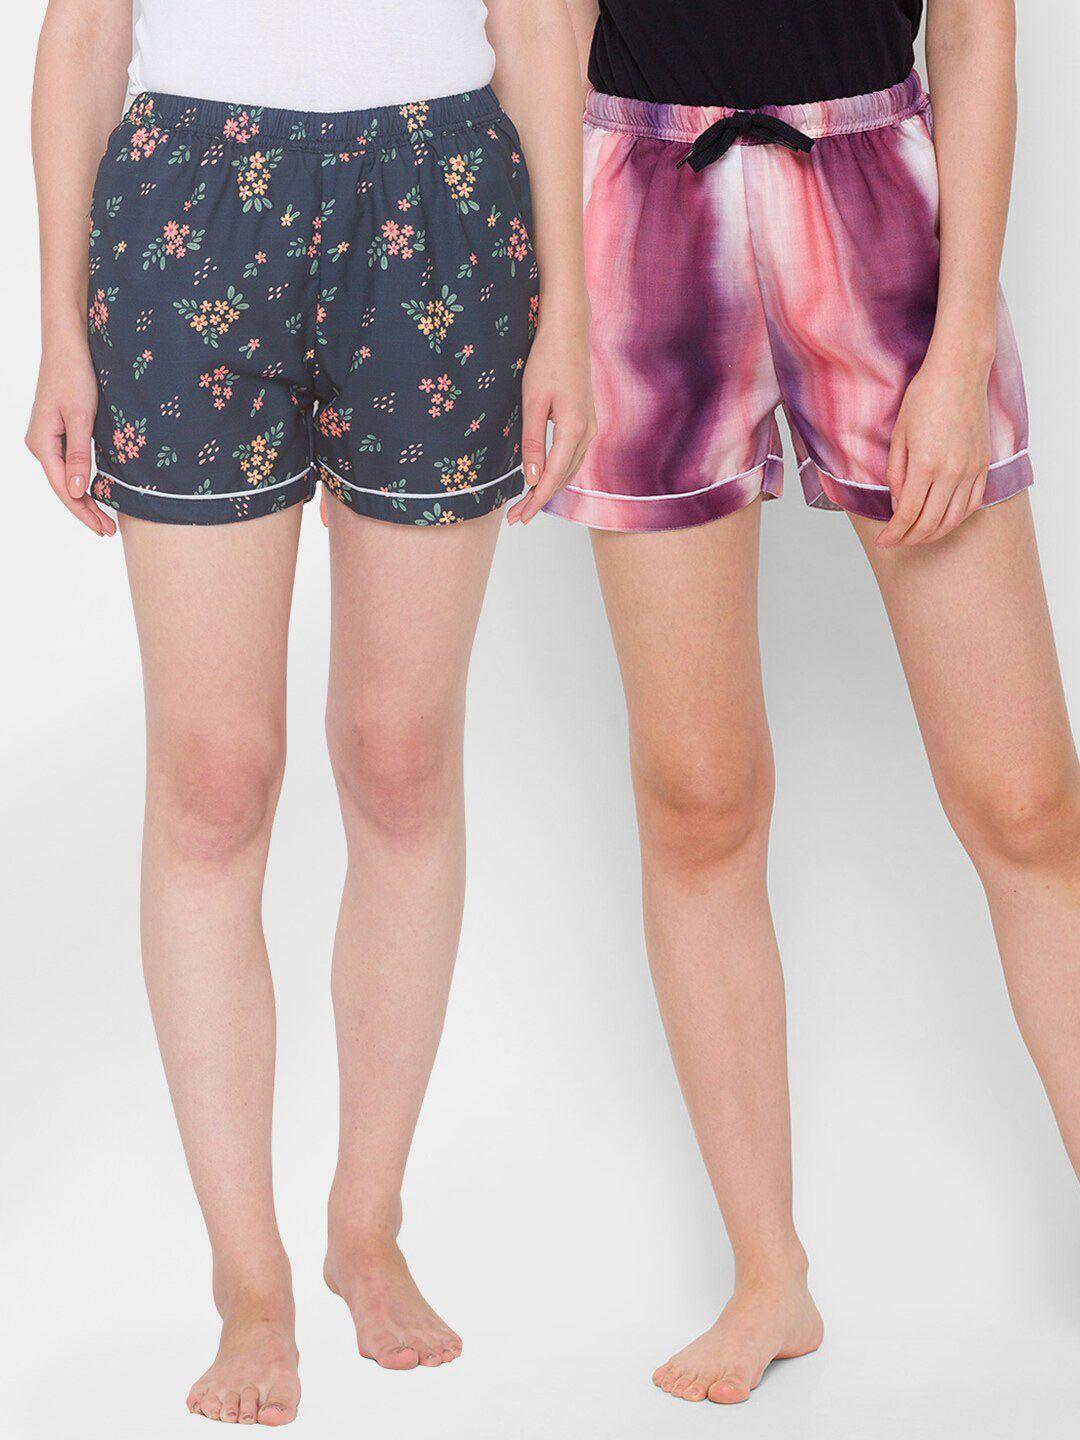 fashionrack women navy blue & purple set of 2 printed lounge shorts